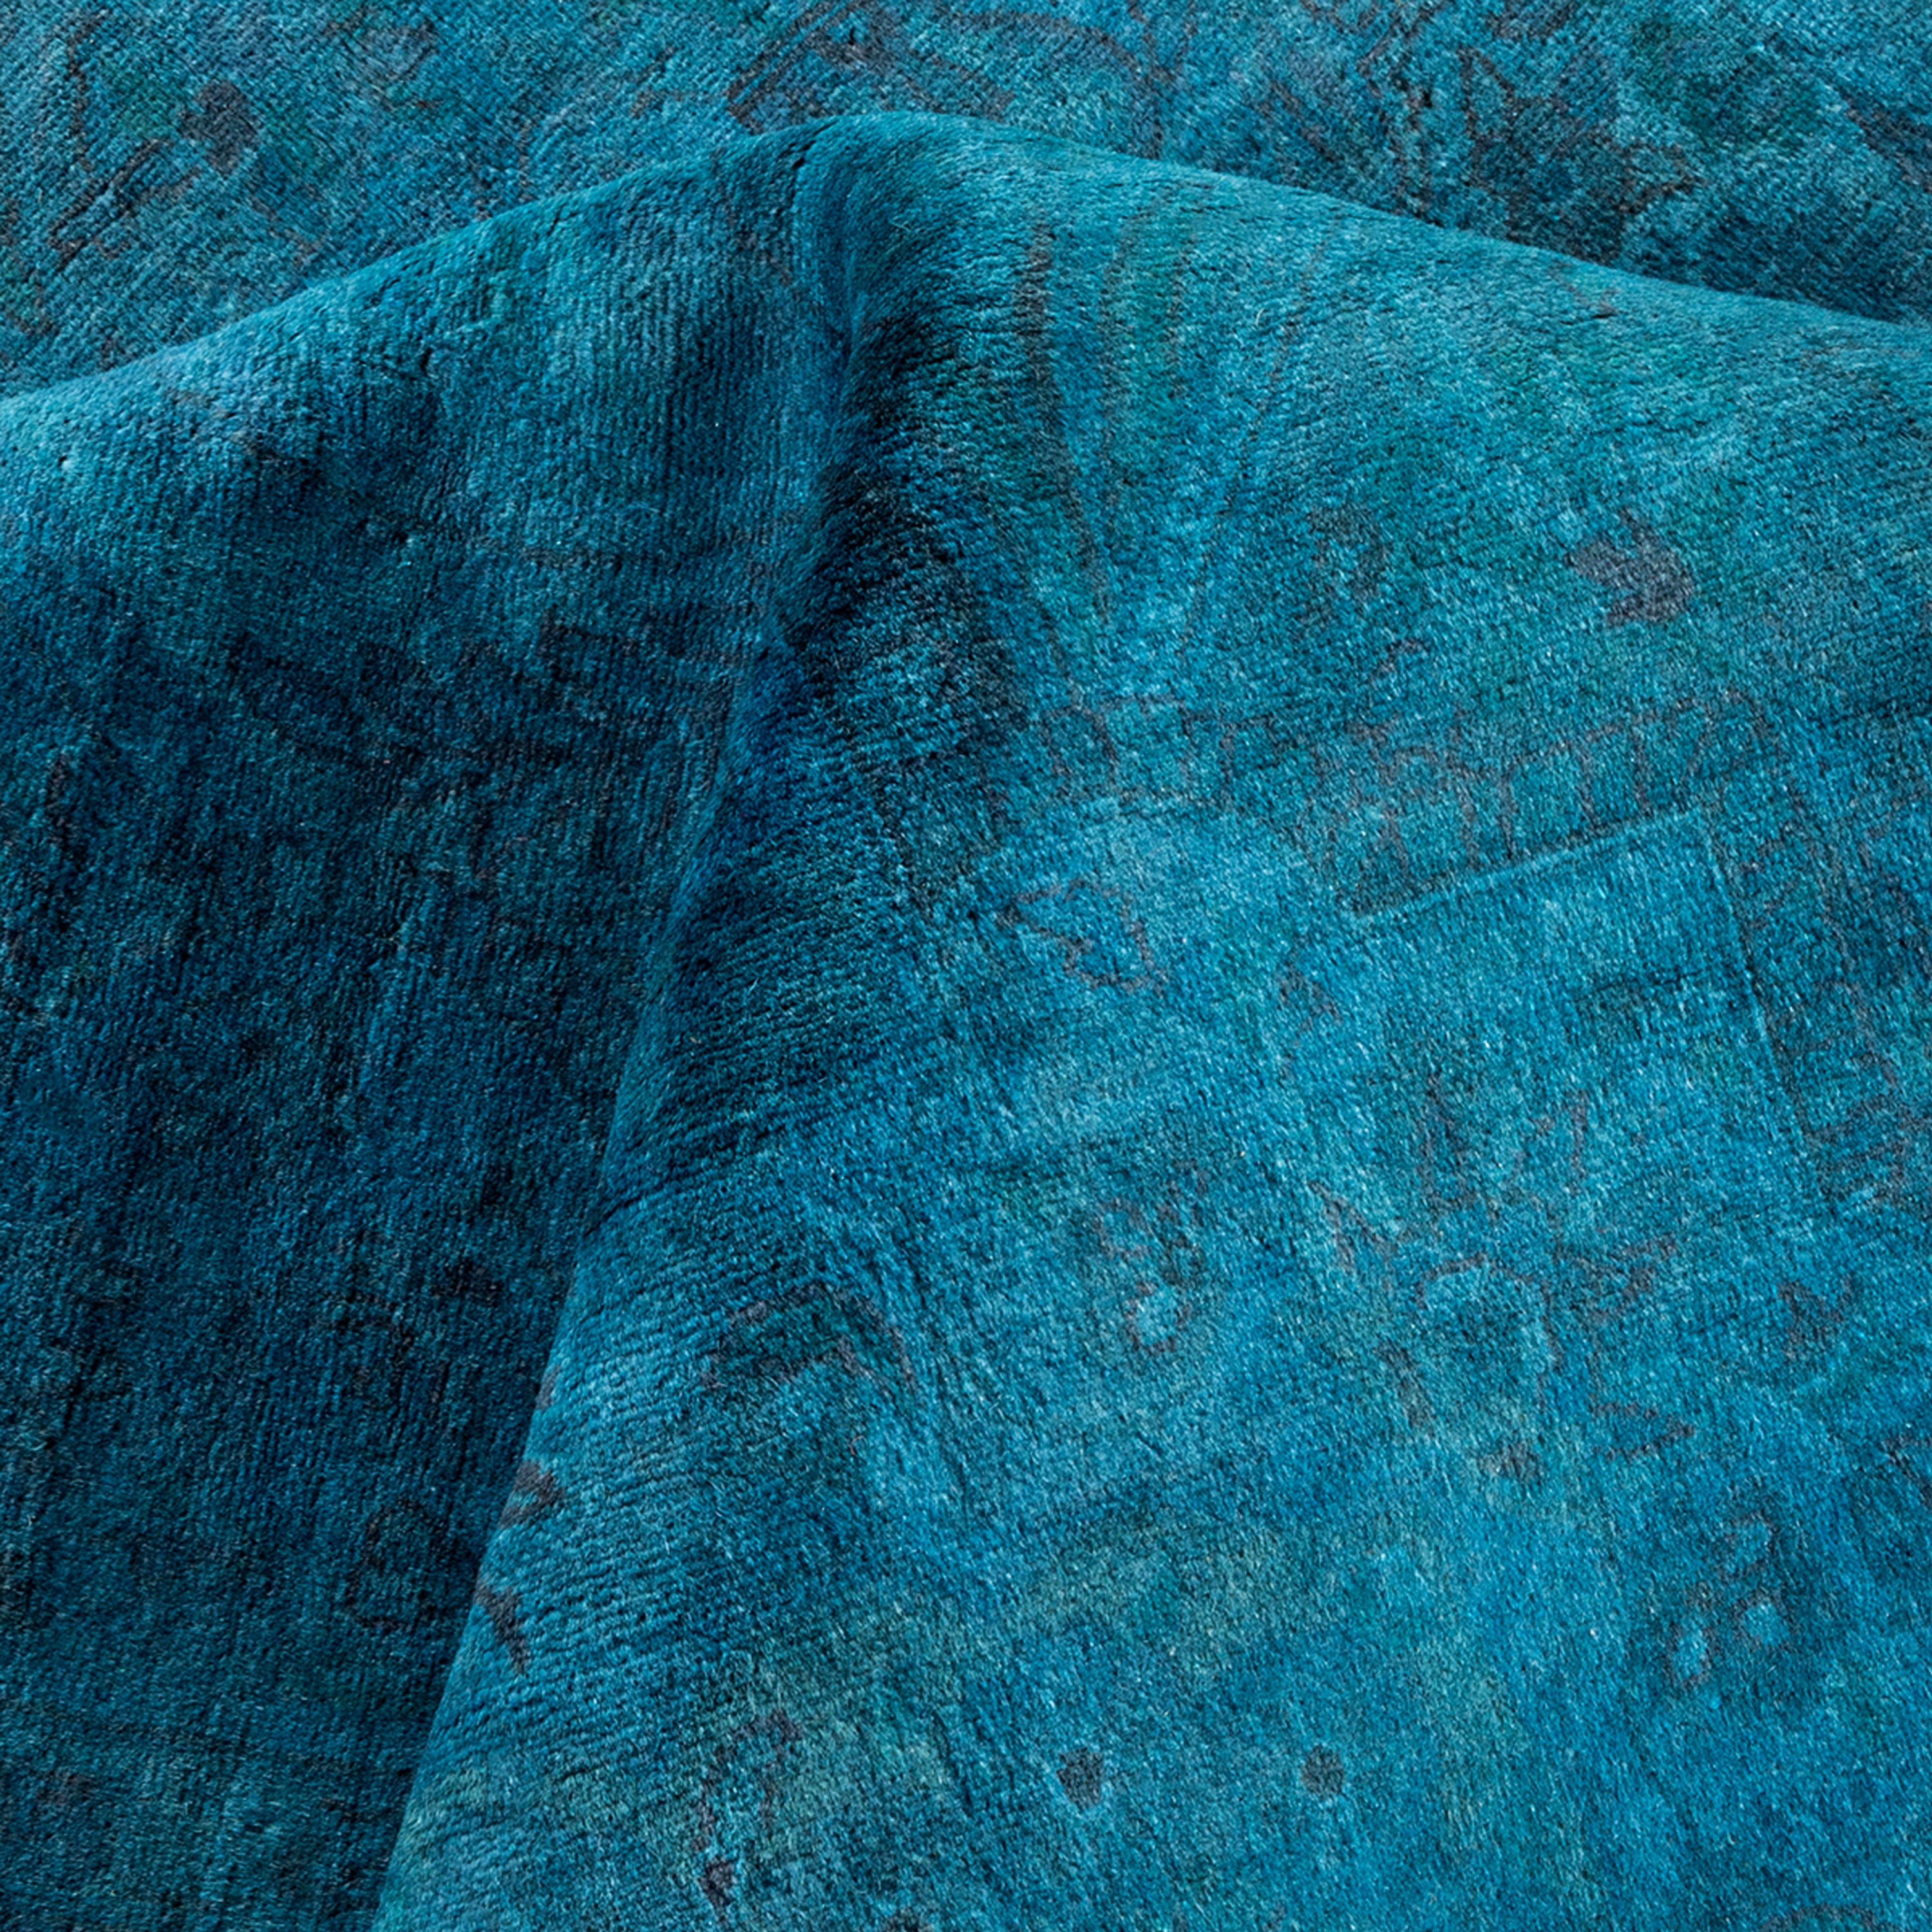 Blue Transitional Wool Rug - 10'2" x 13'10"